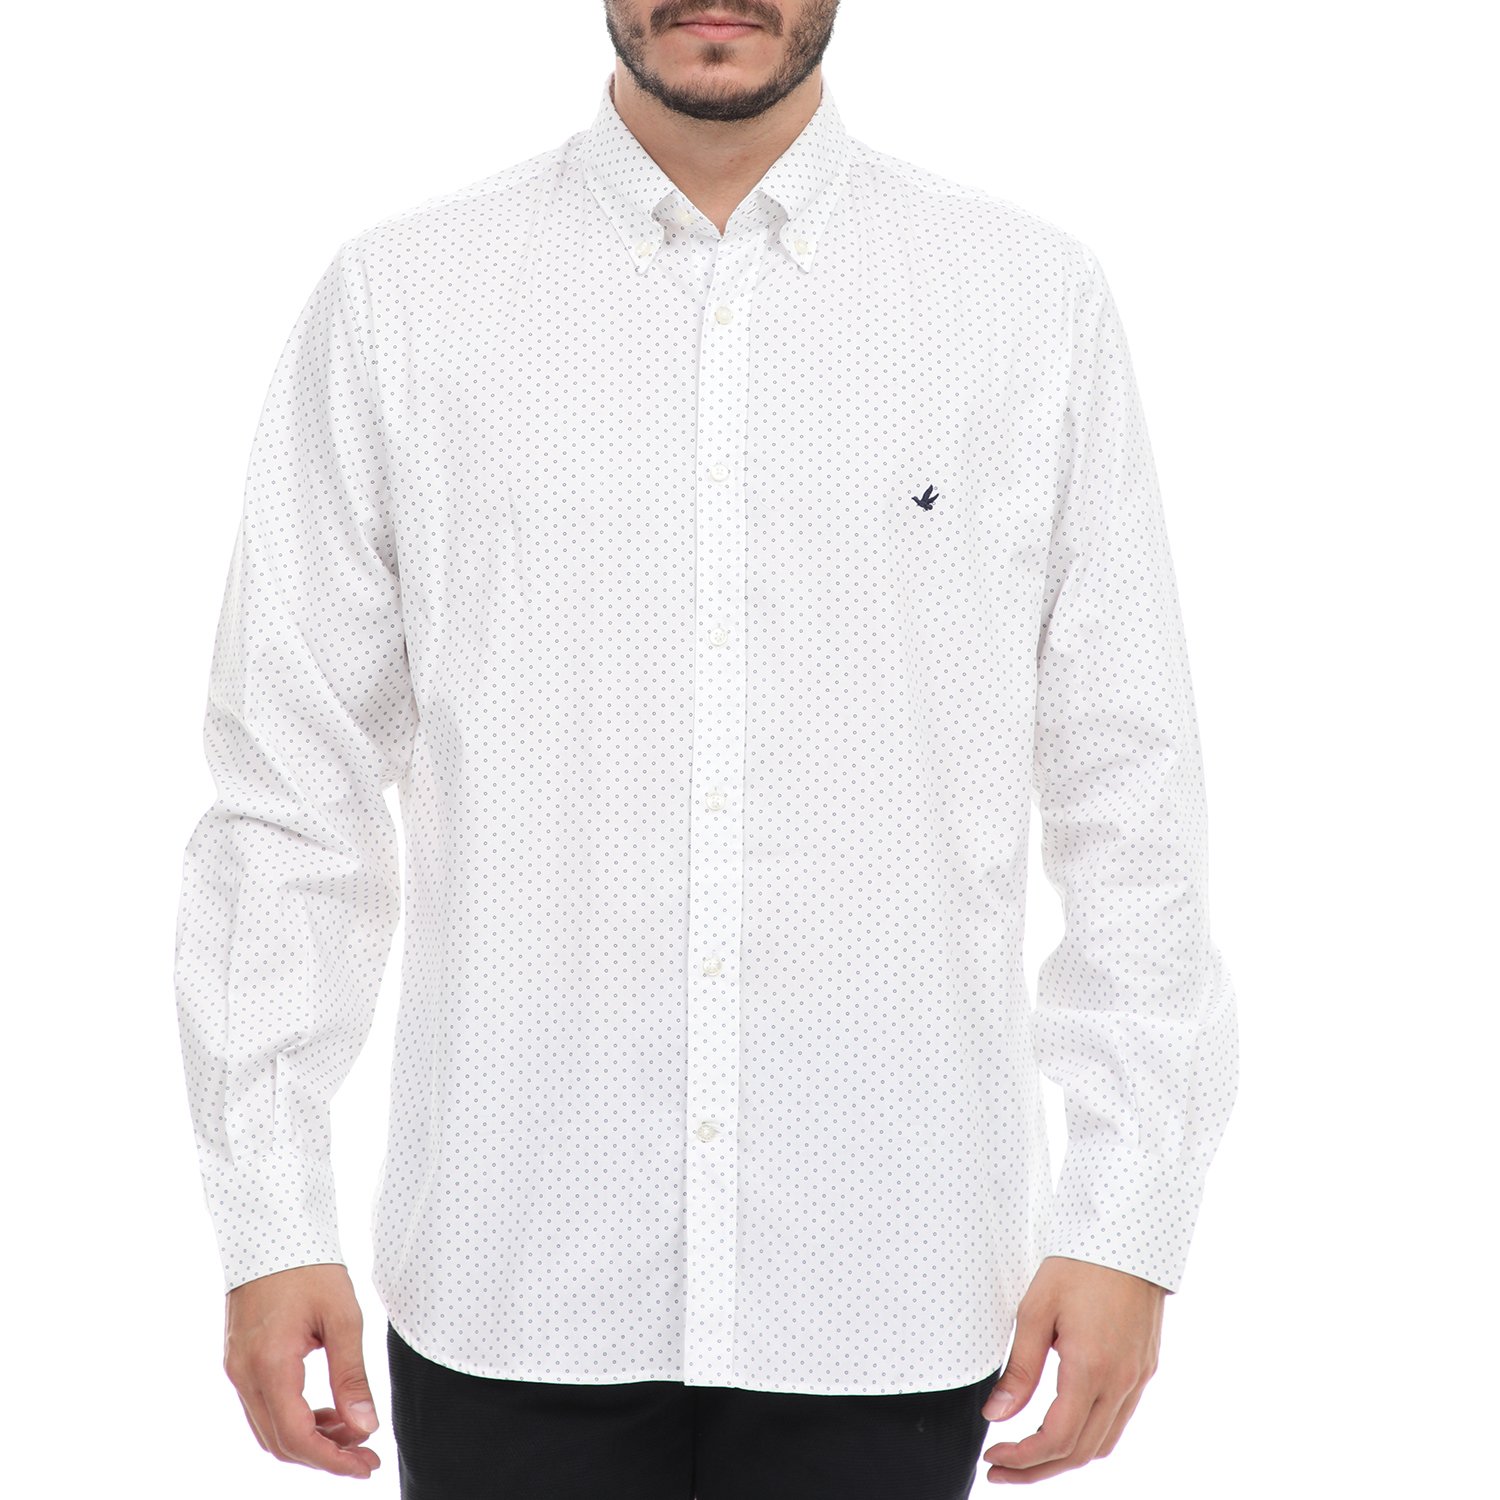 BROOKSFIELD - Ανδρικό πουκάμισο BROOKSFIELD λευκό μπλε Ανδρικά/Ρούχα/Πουκάμισα/Μακρυμάνικα